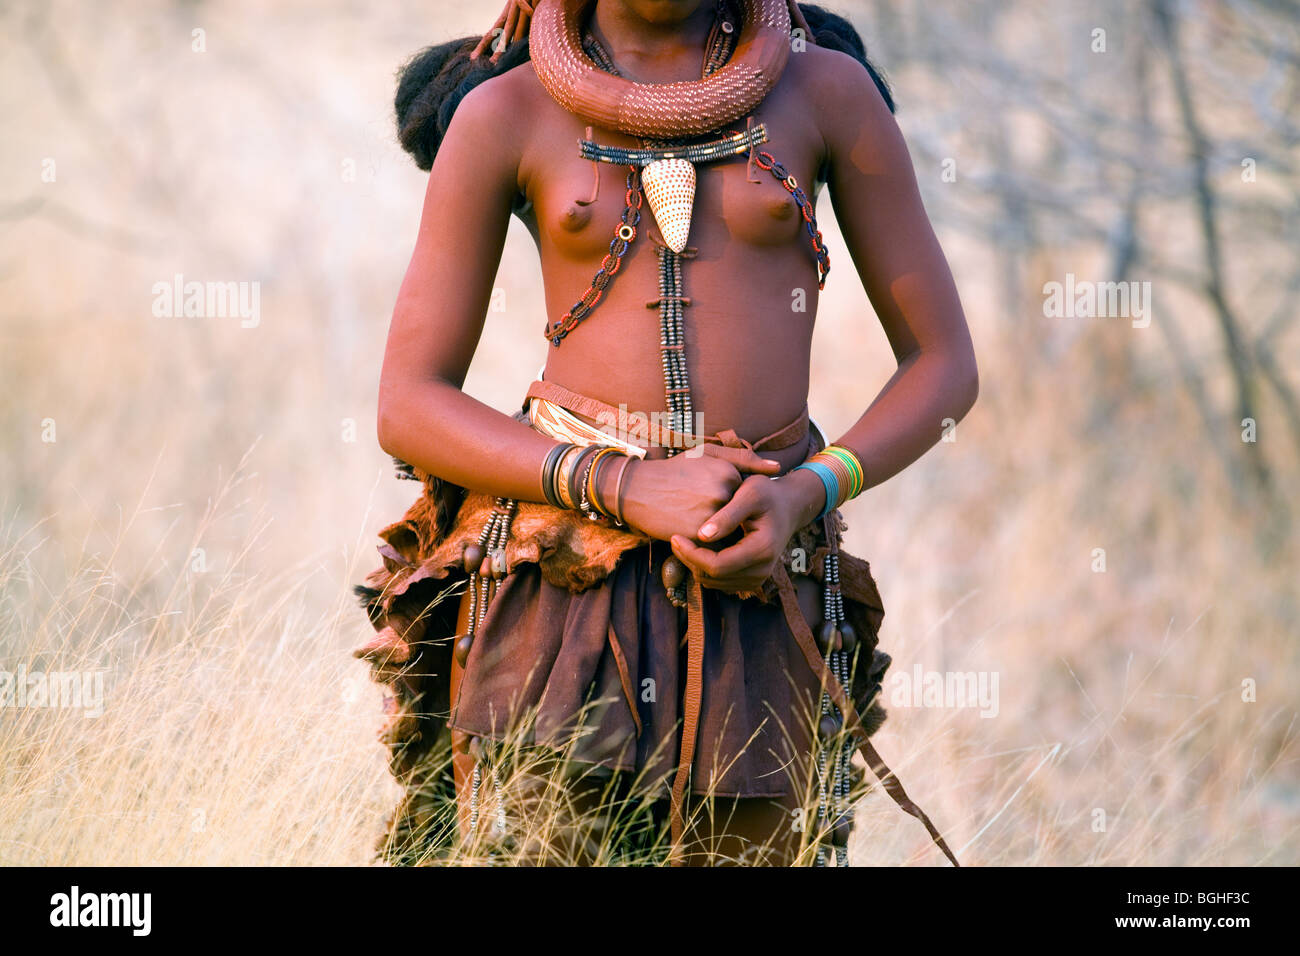 Young girl of the Himba tribe, Opuwo, Namibia Stock Photo